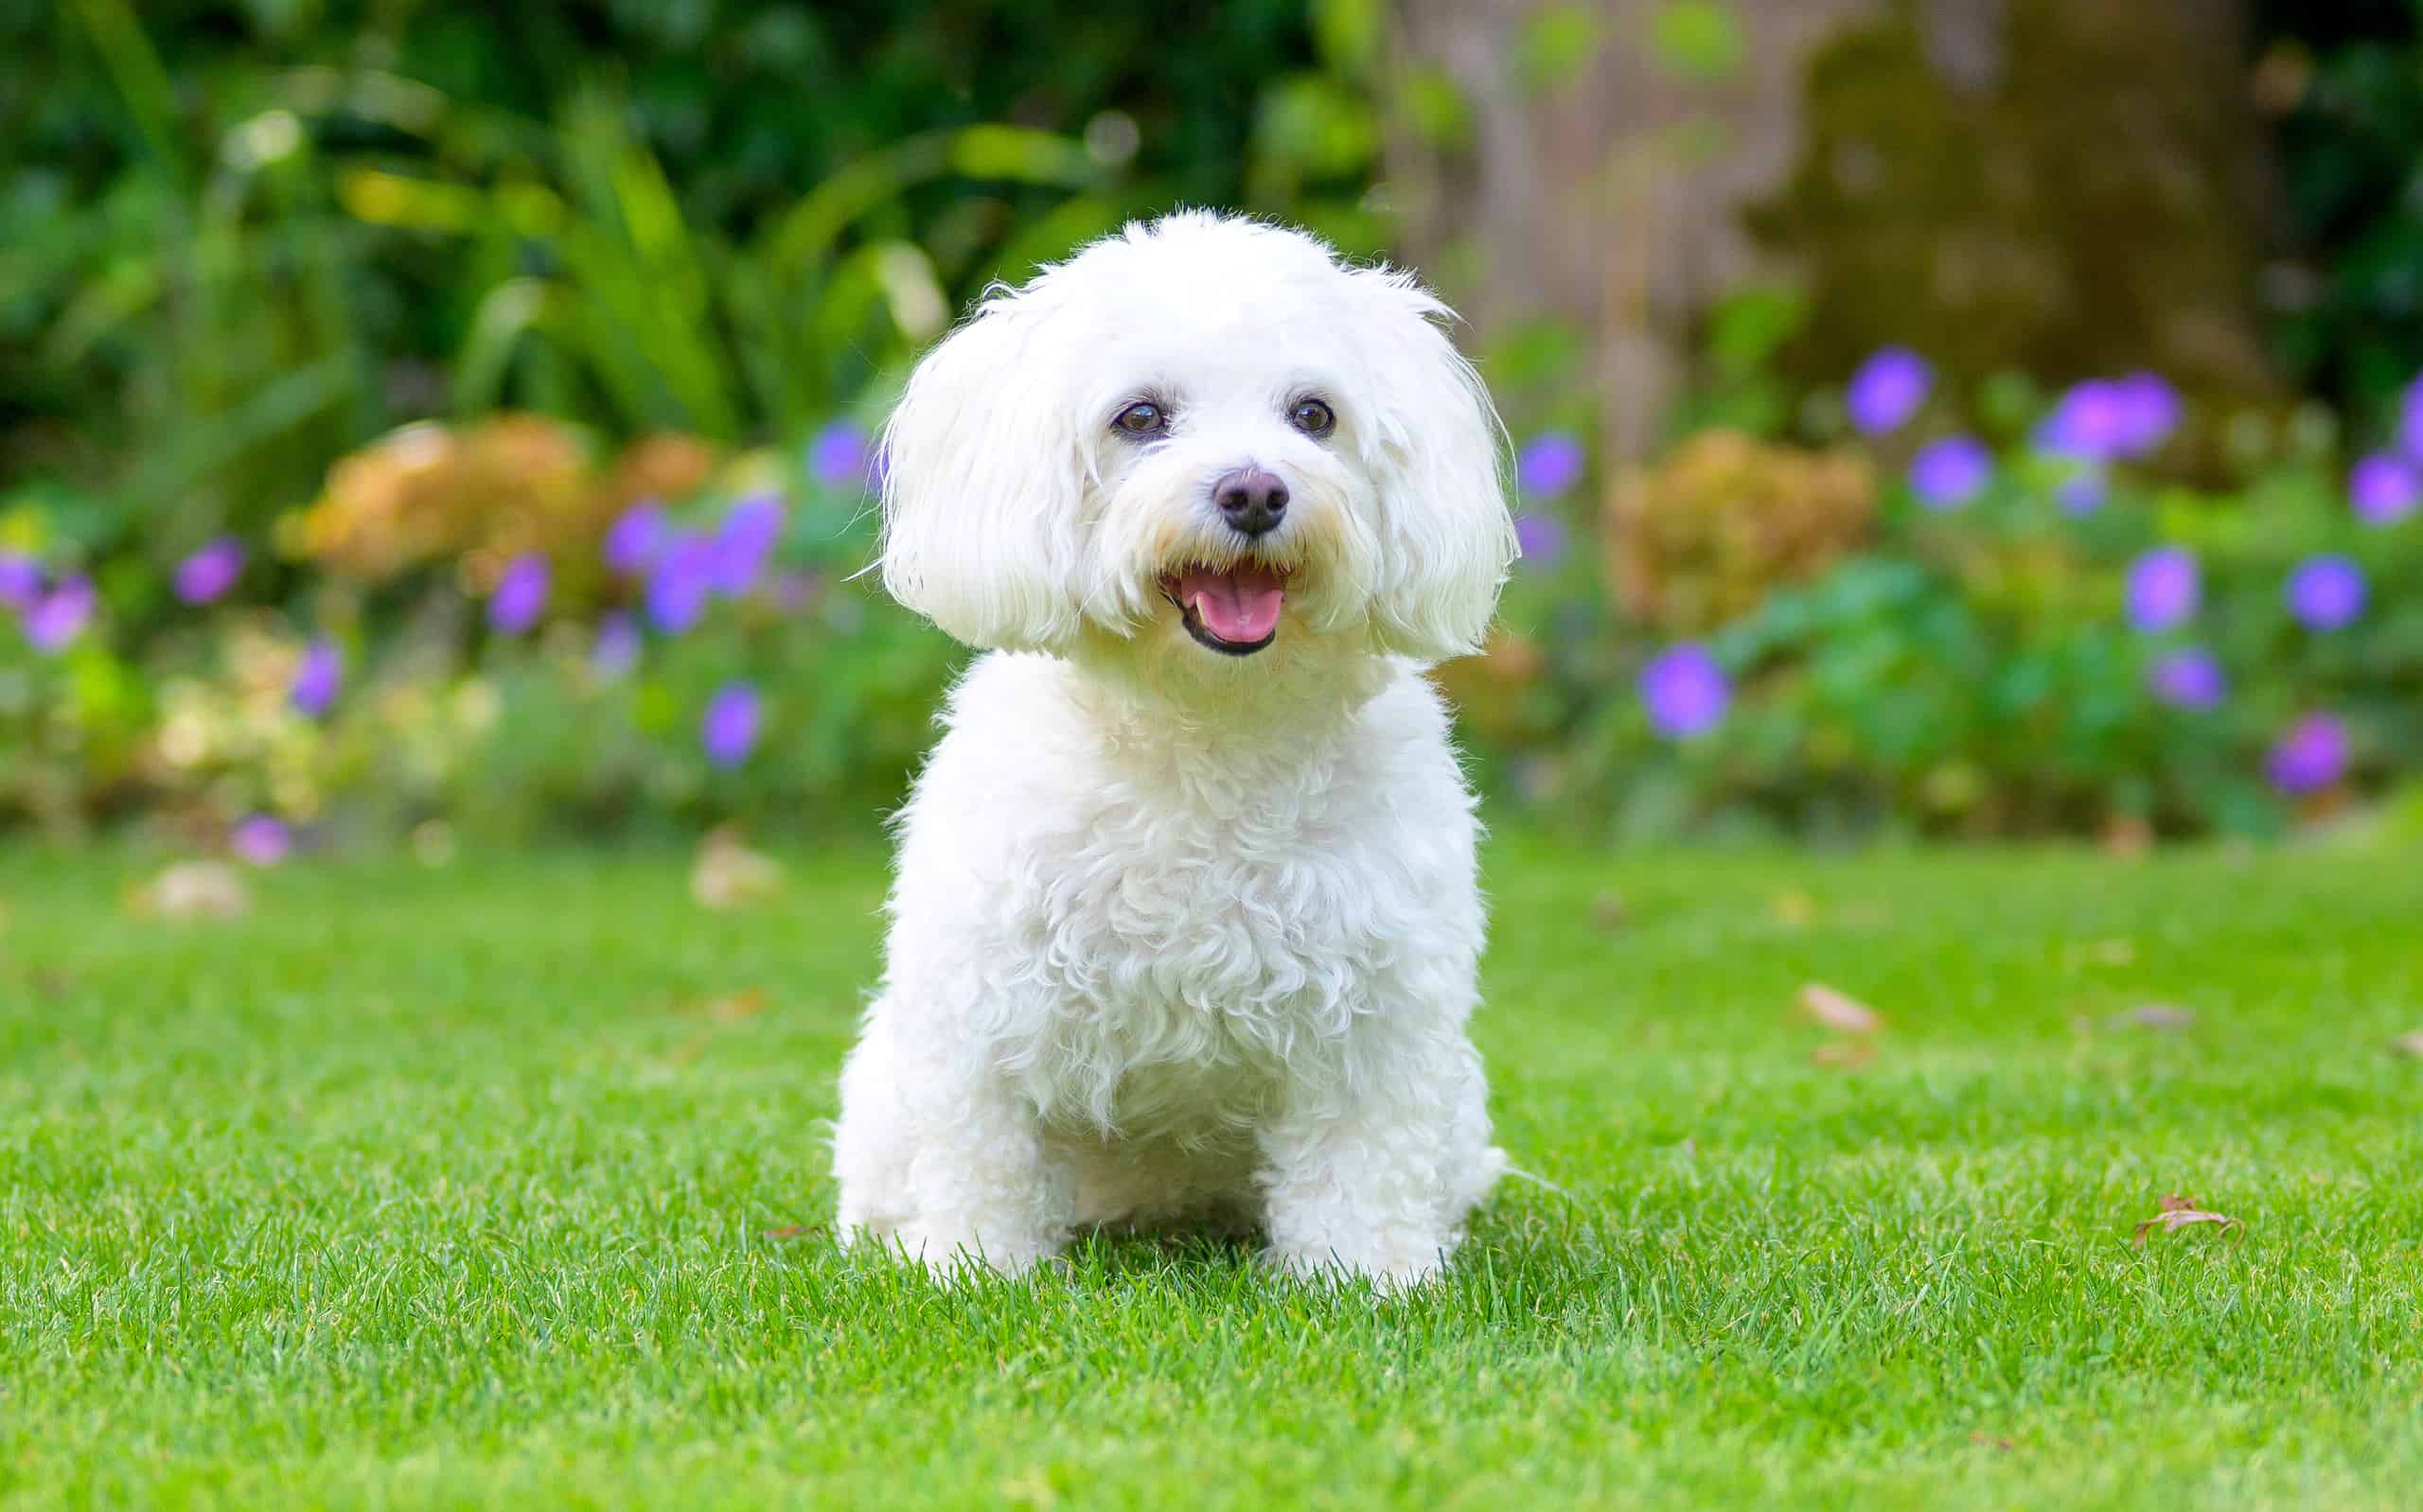 Cute little fluffy white Havanese dog in a lush green garden